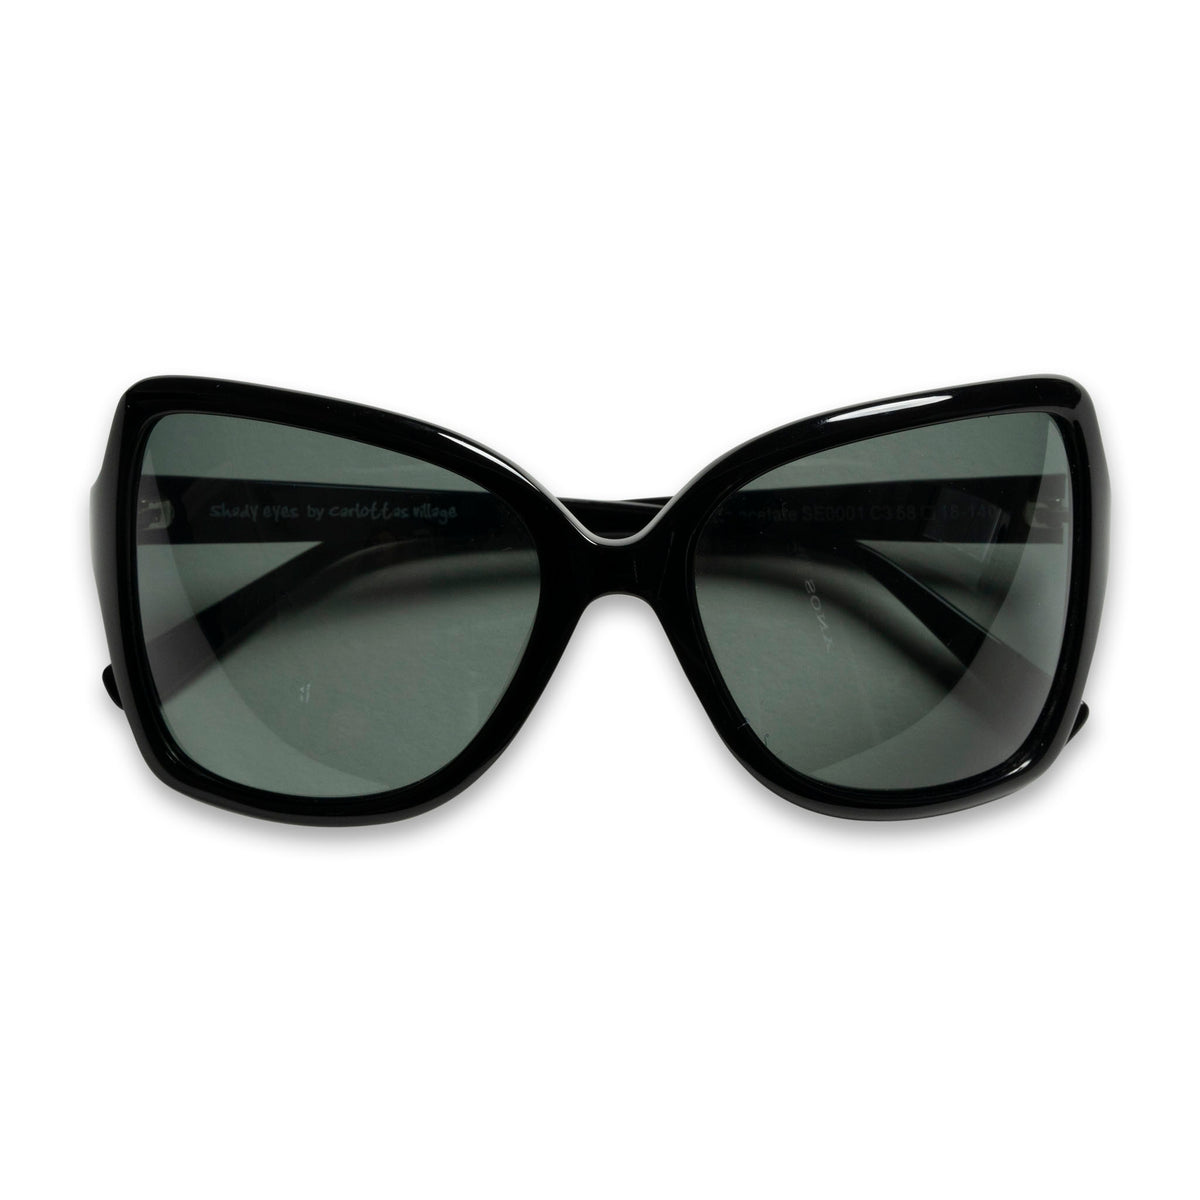 Carlottas-village-butterfly-acetate-sunglasses-black